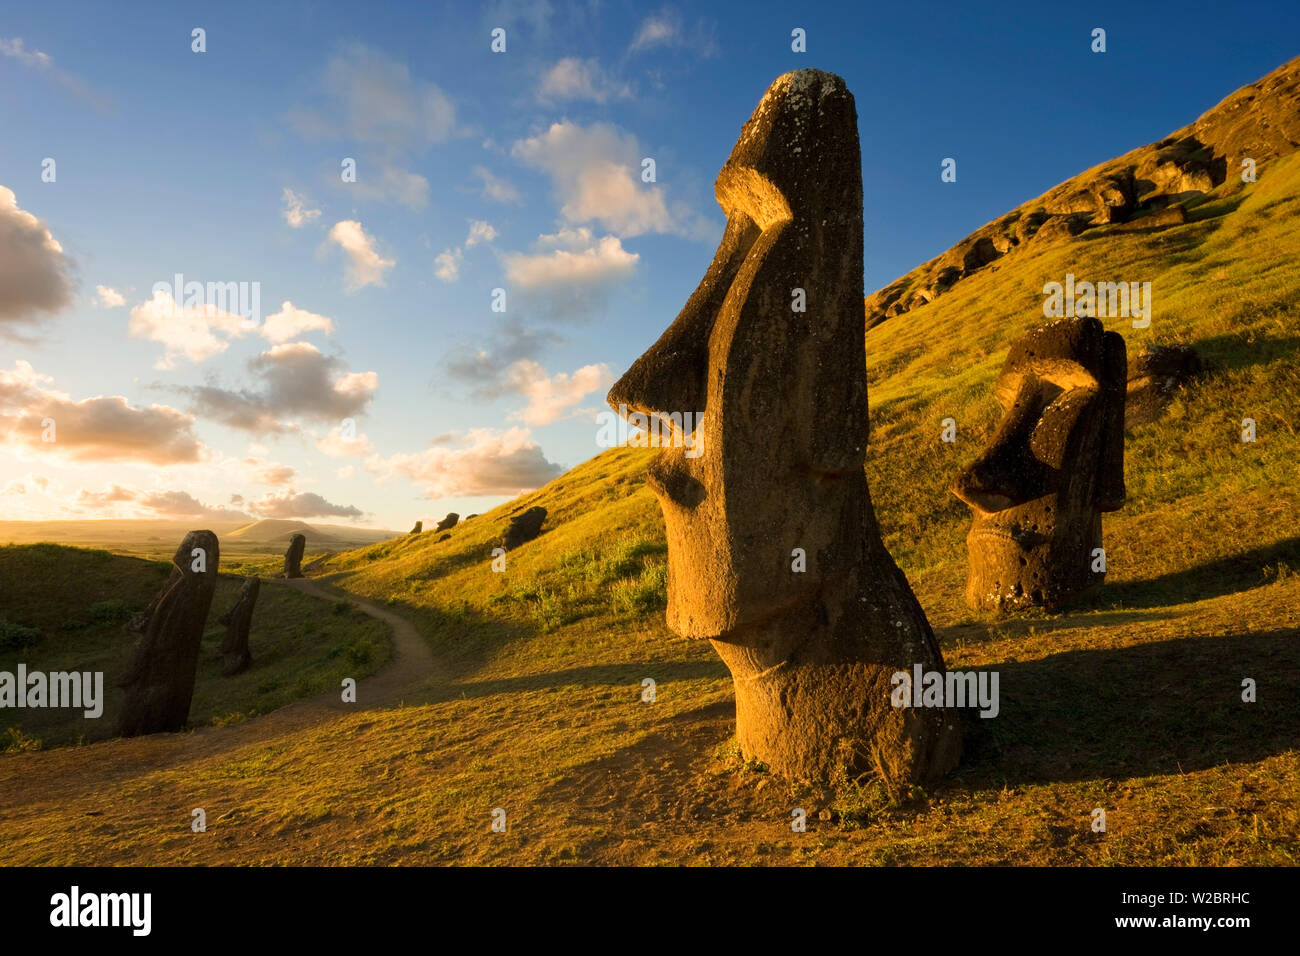 South America, Chile, Rapa Nui, Easter Island, giant monolithic stone Maoi statues at Rano Raraku Stock Photo